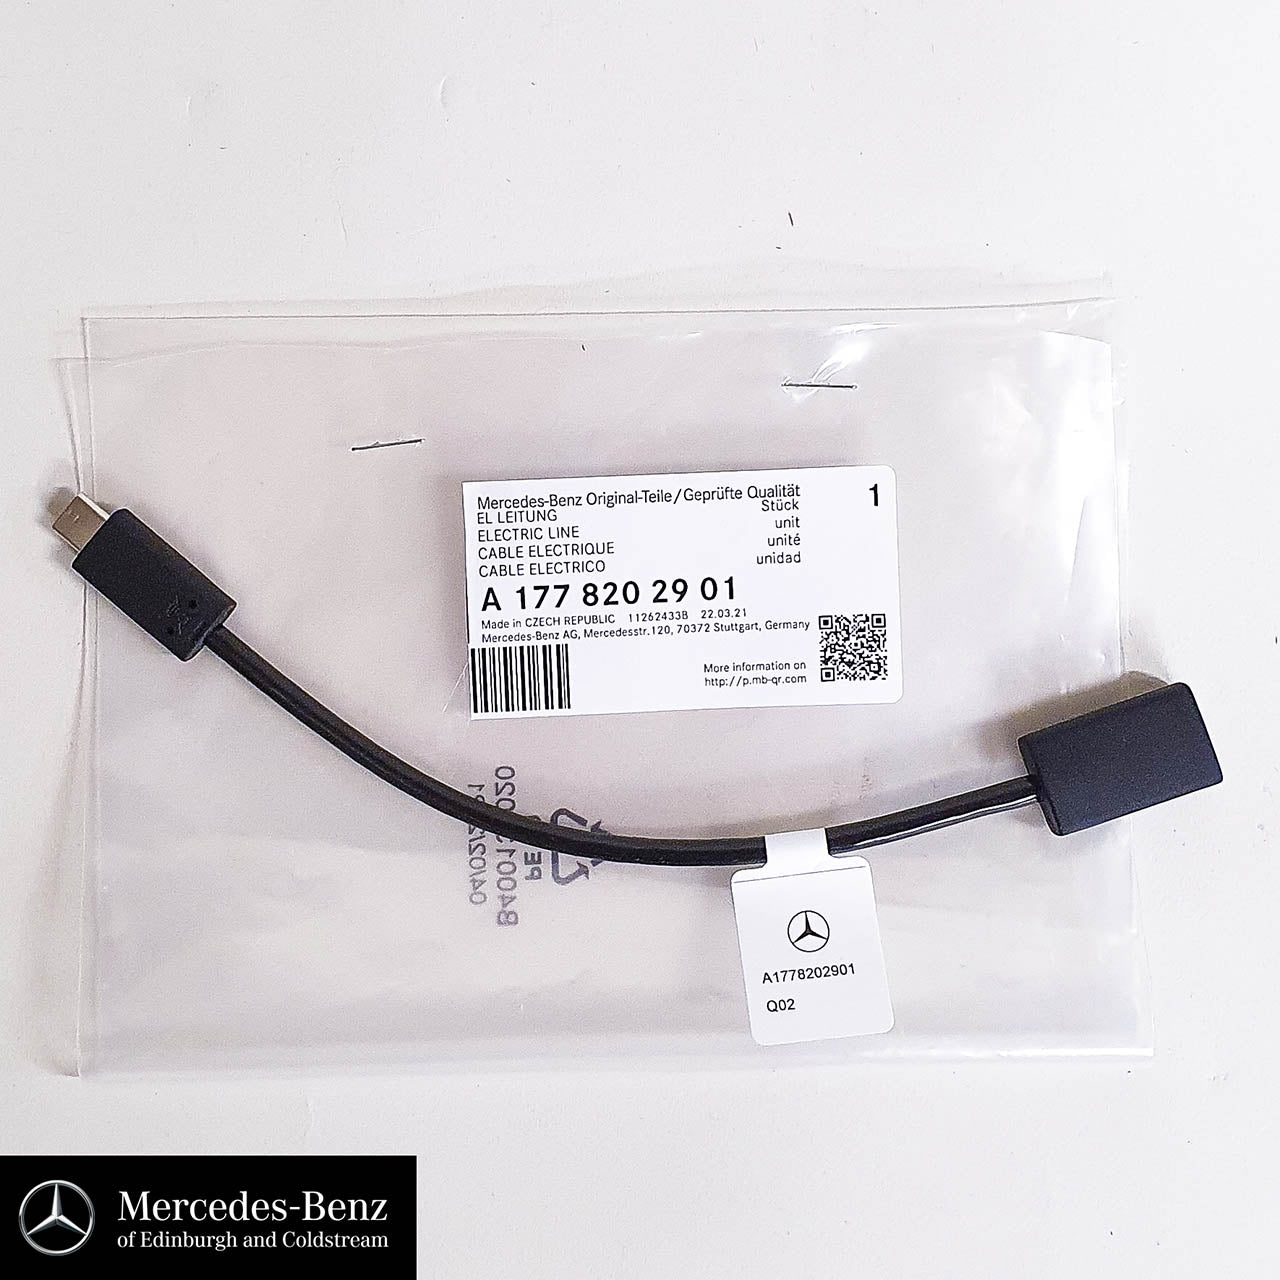 Câble adaptateur interface média Mercedes-Benz